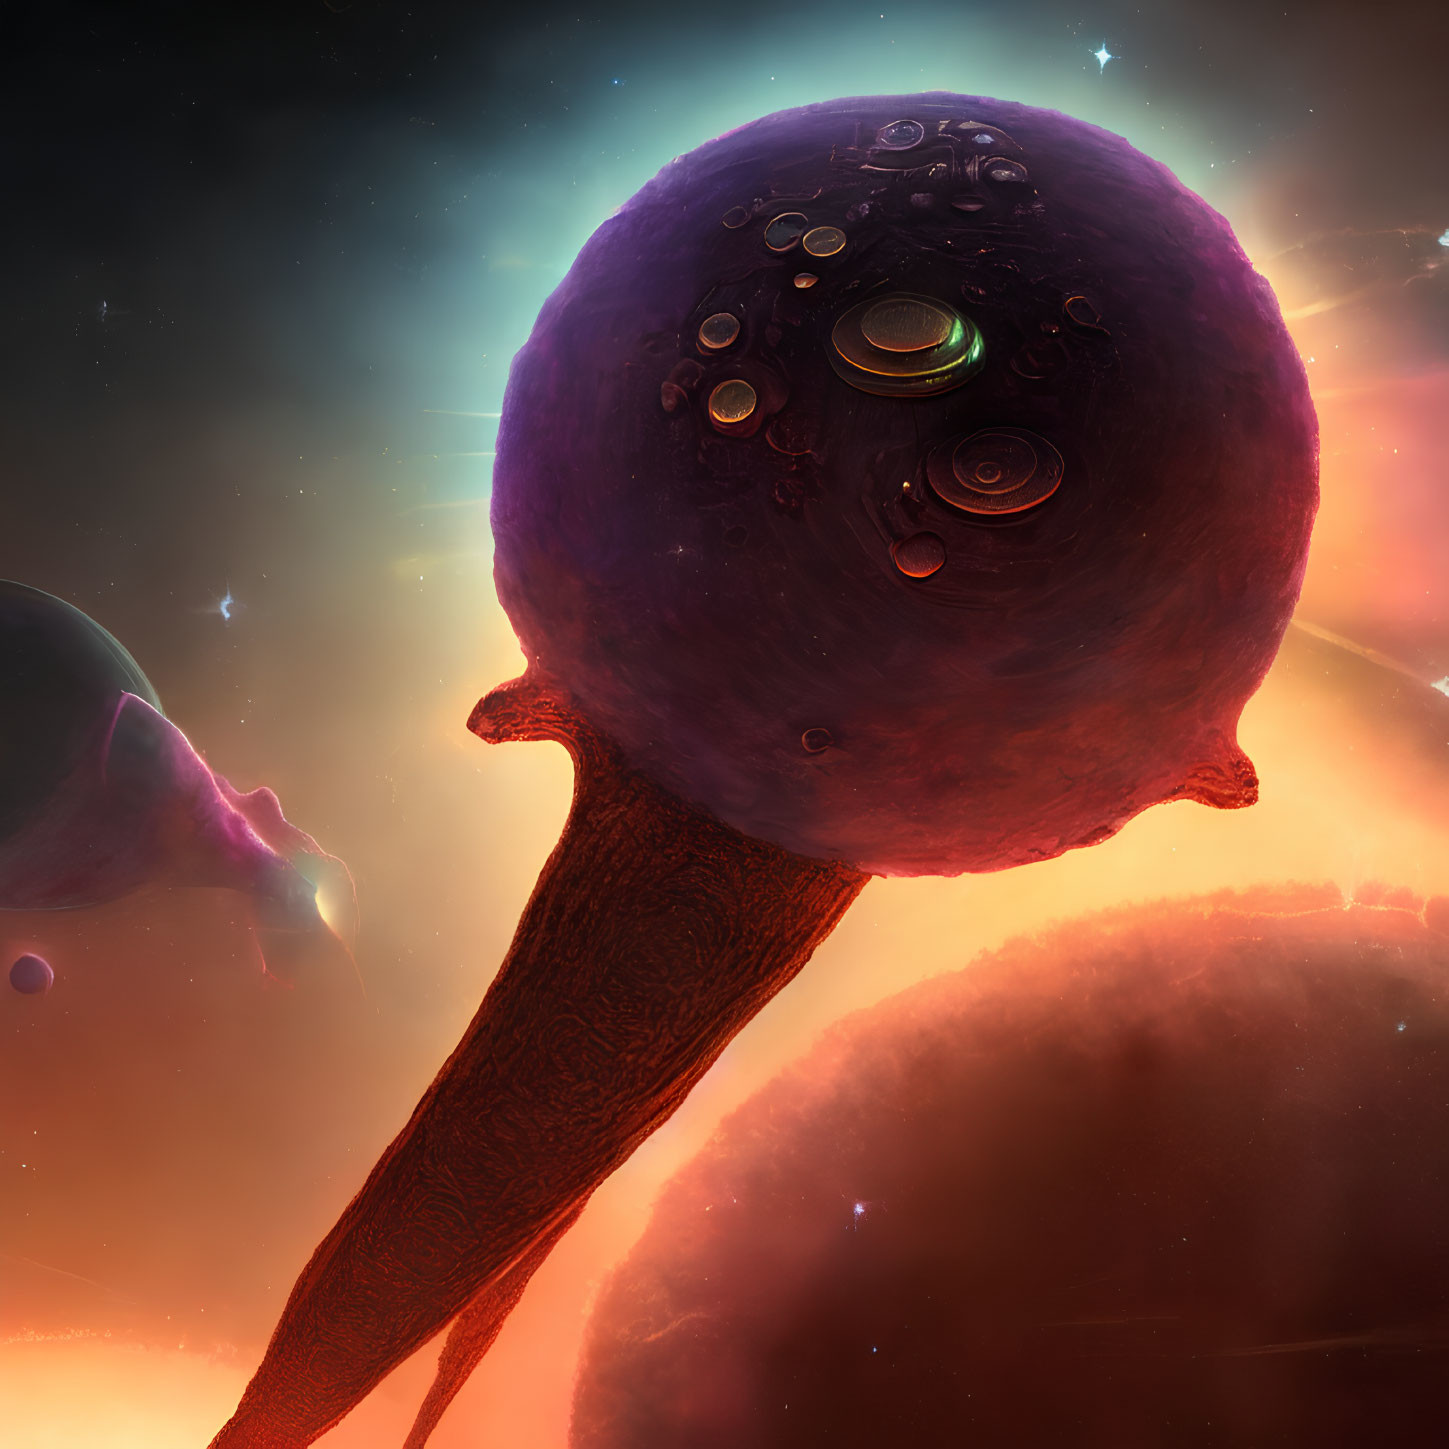 Surreal purple spherical lollipop structure in cosmic setting